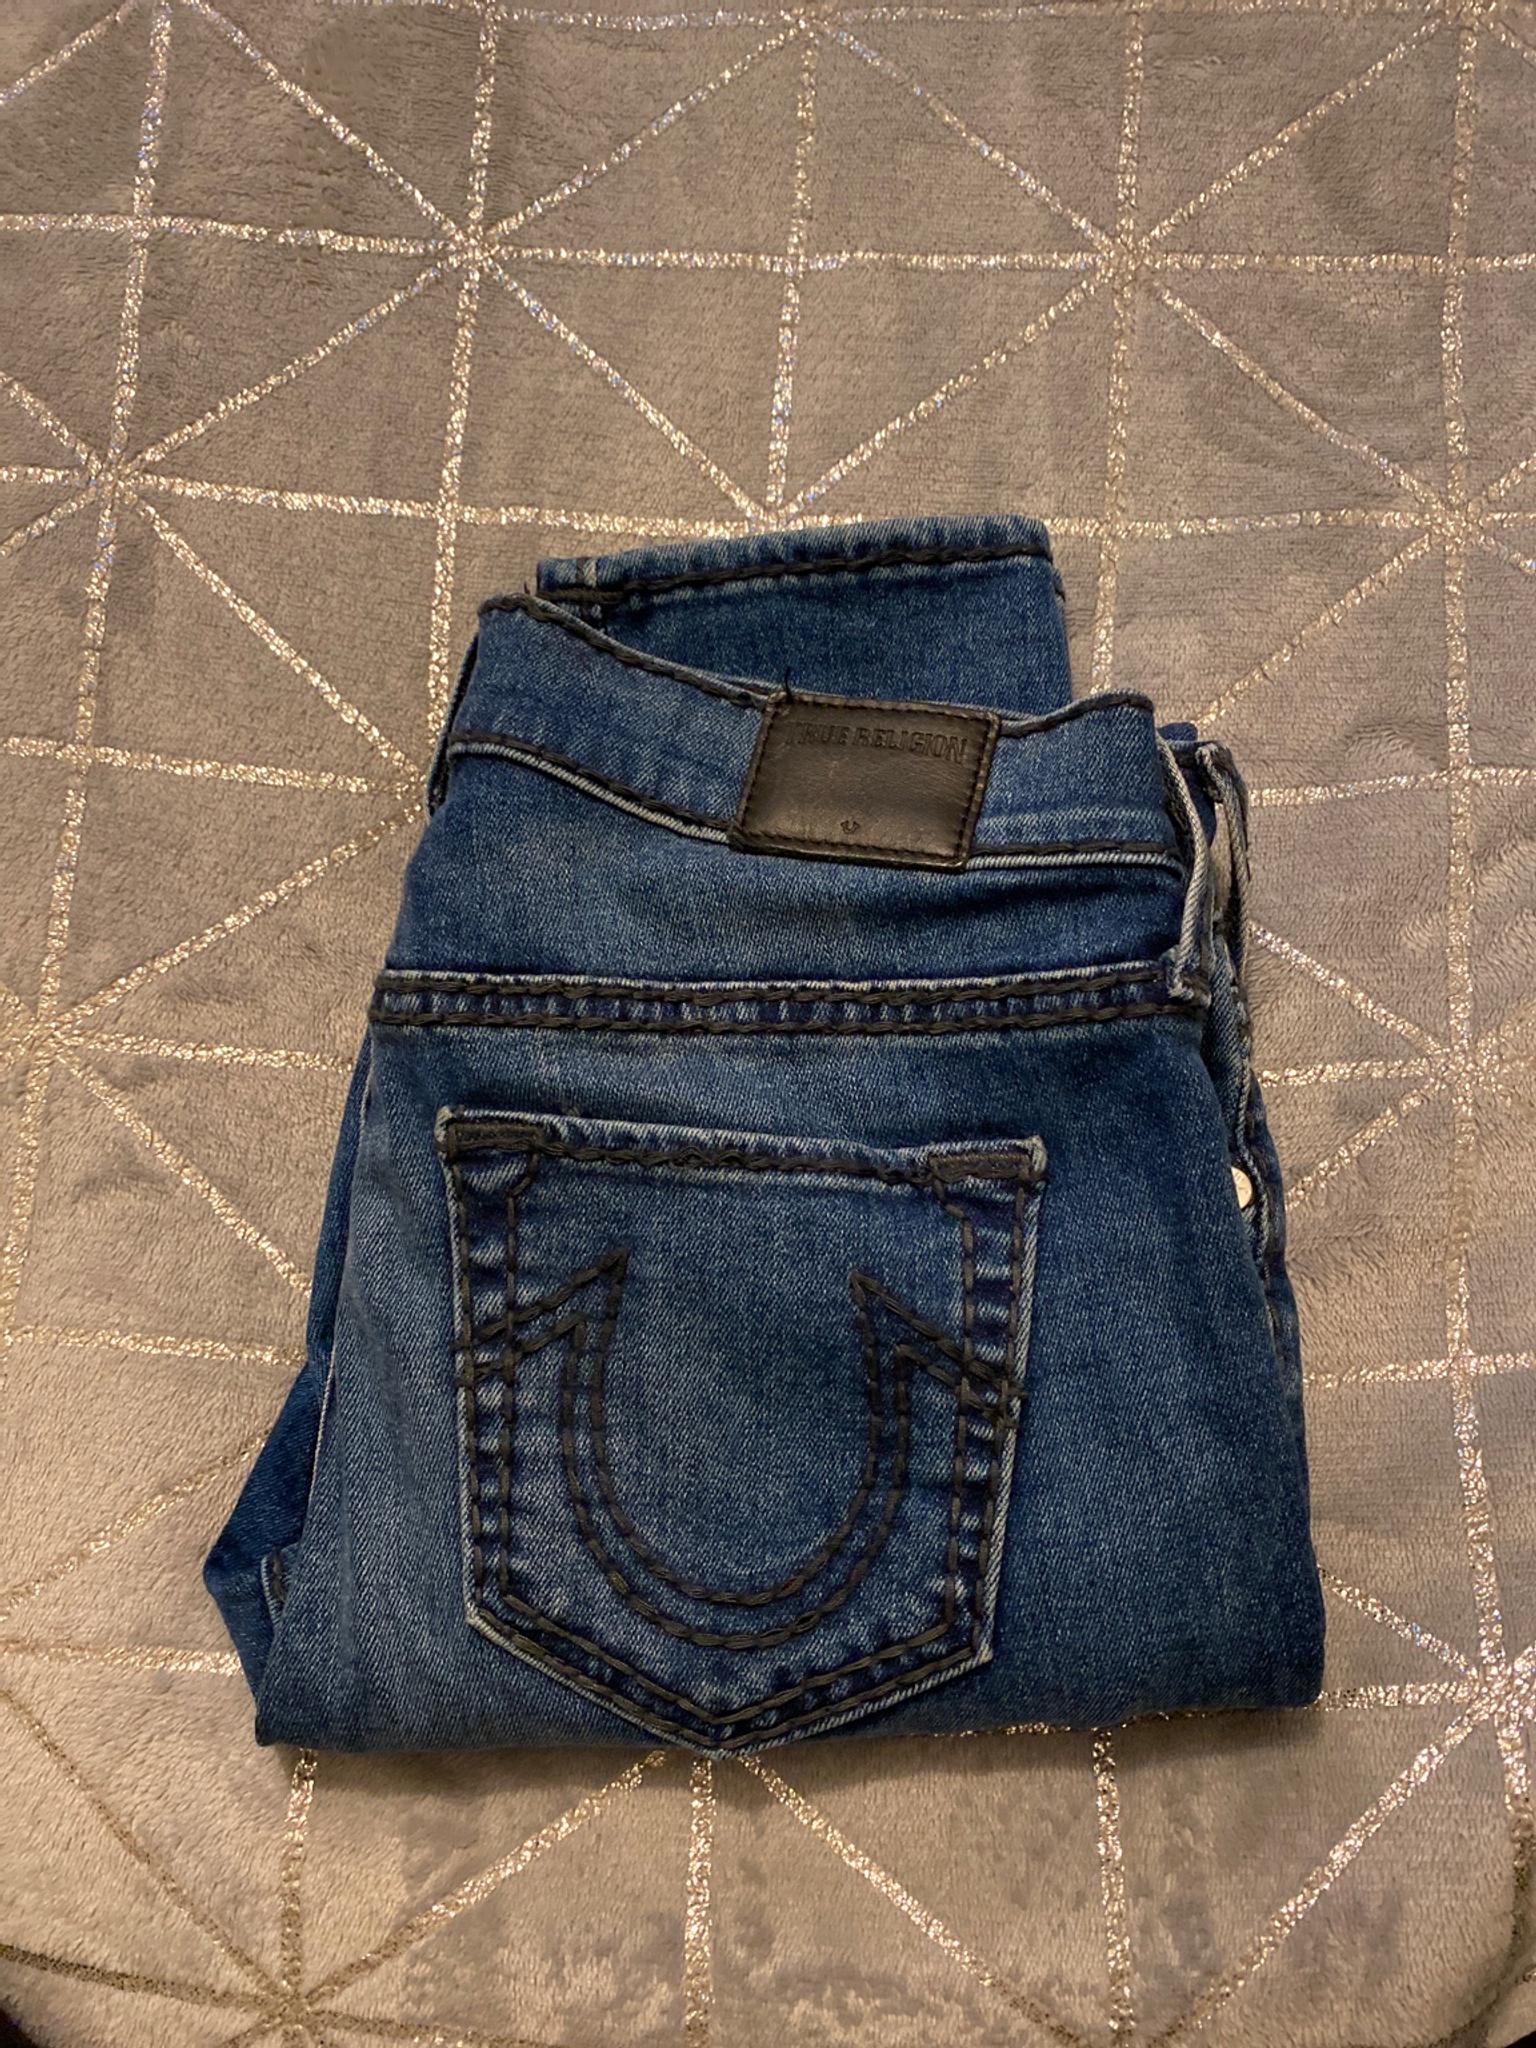 size 27 true religion jeans